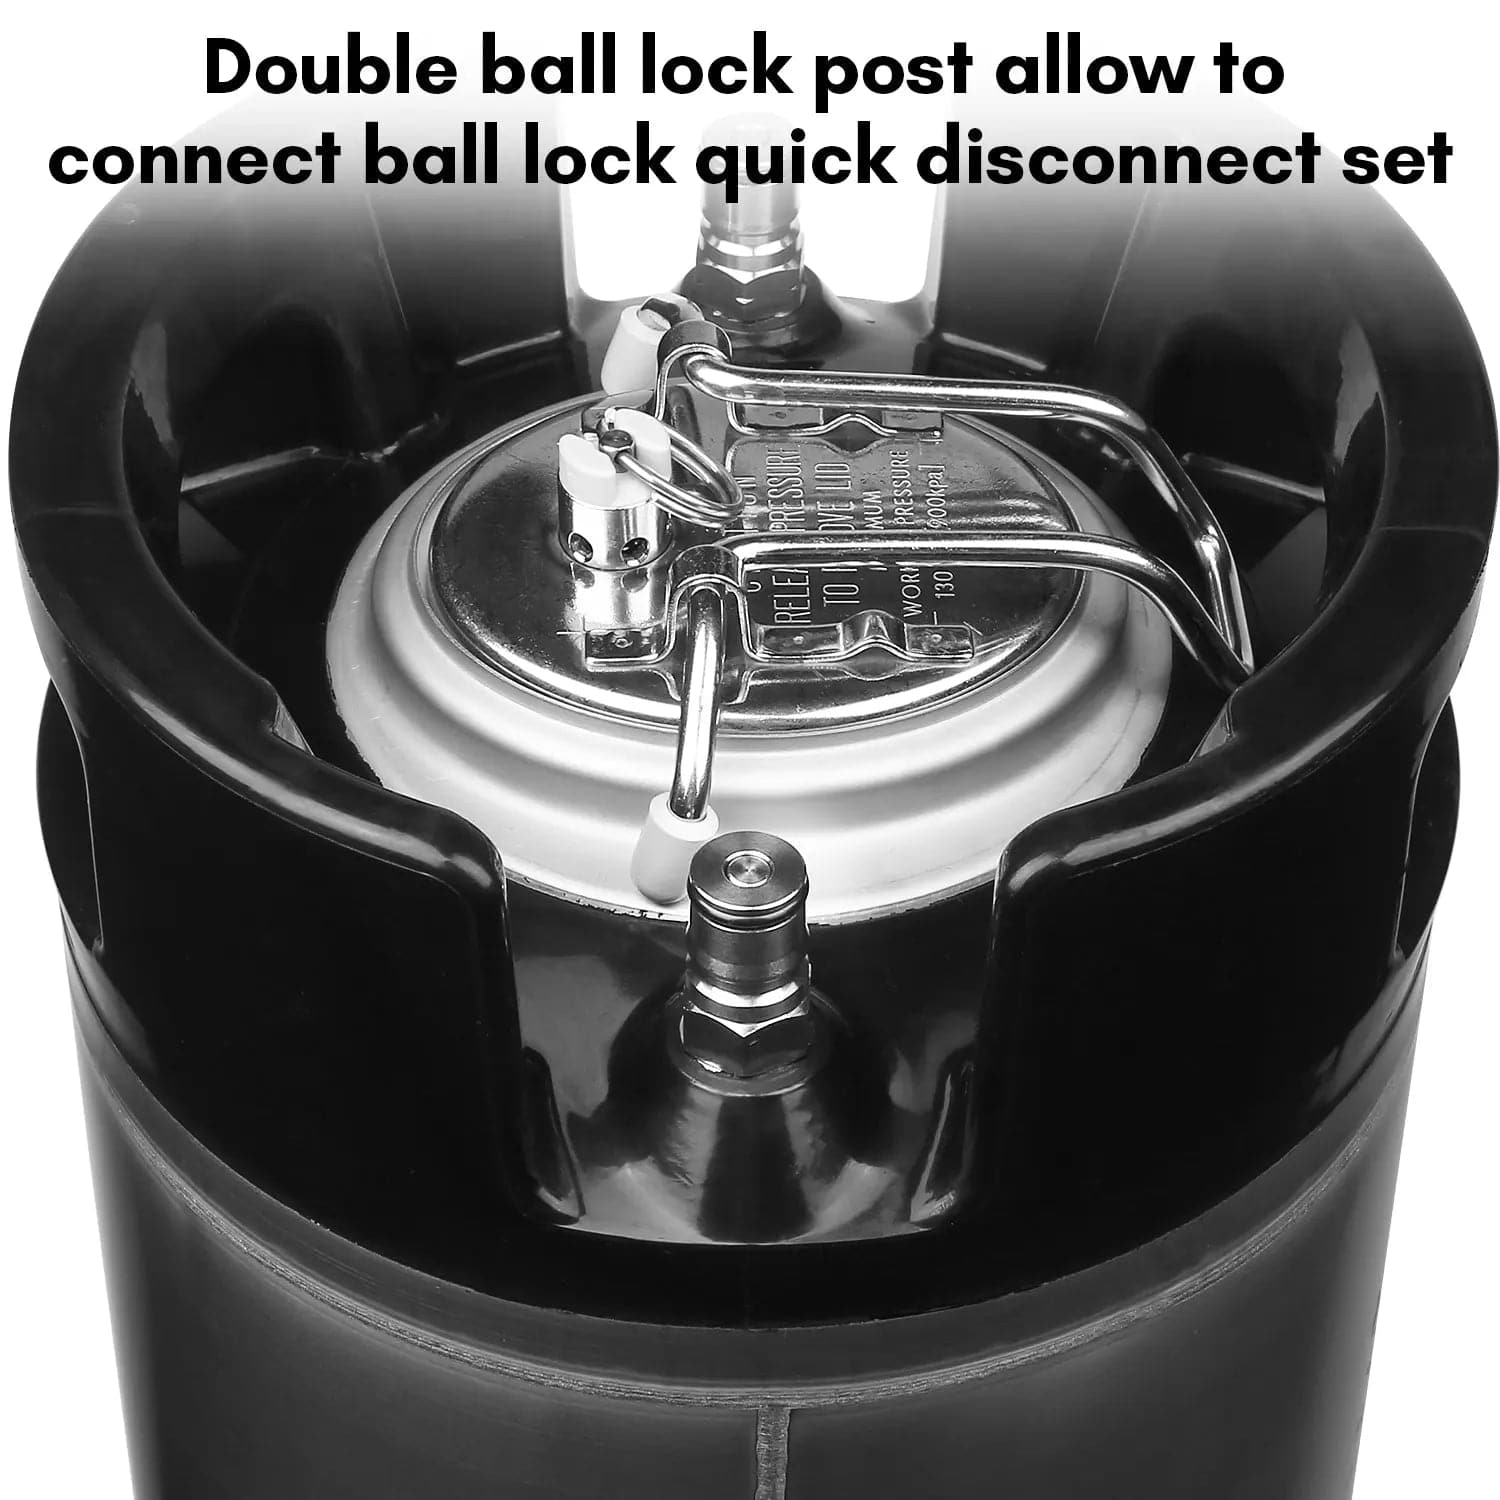 tmcraft 3 gallon ball lock keg products details 2